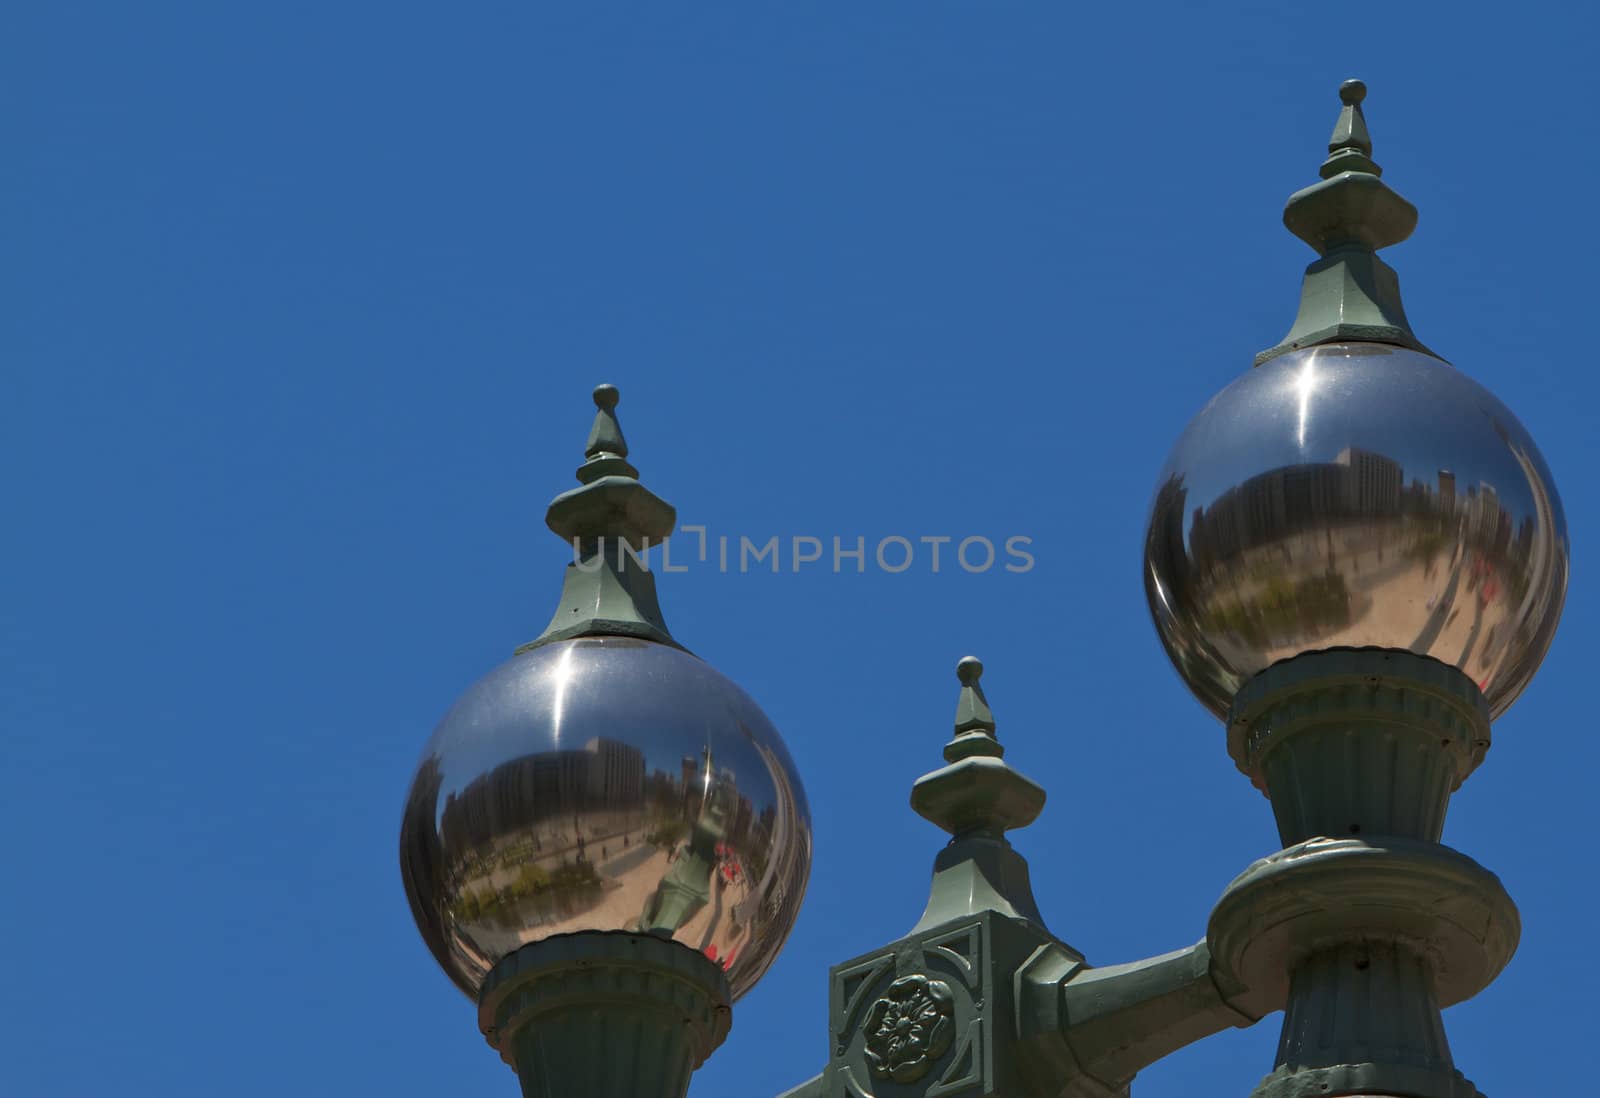 Unusual two mirror sphere or globe light post